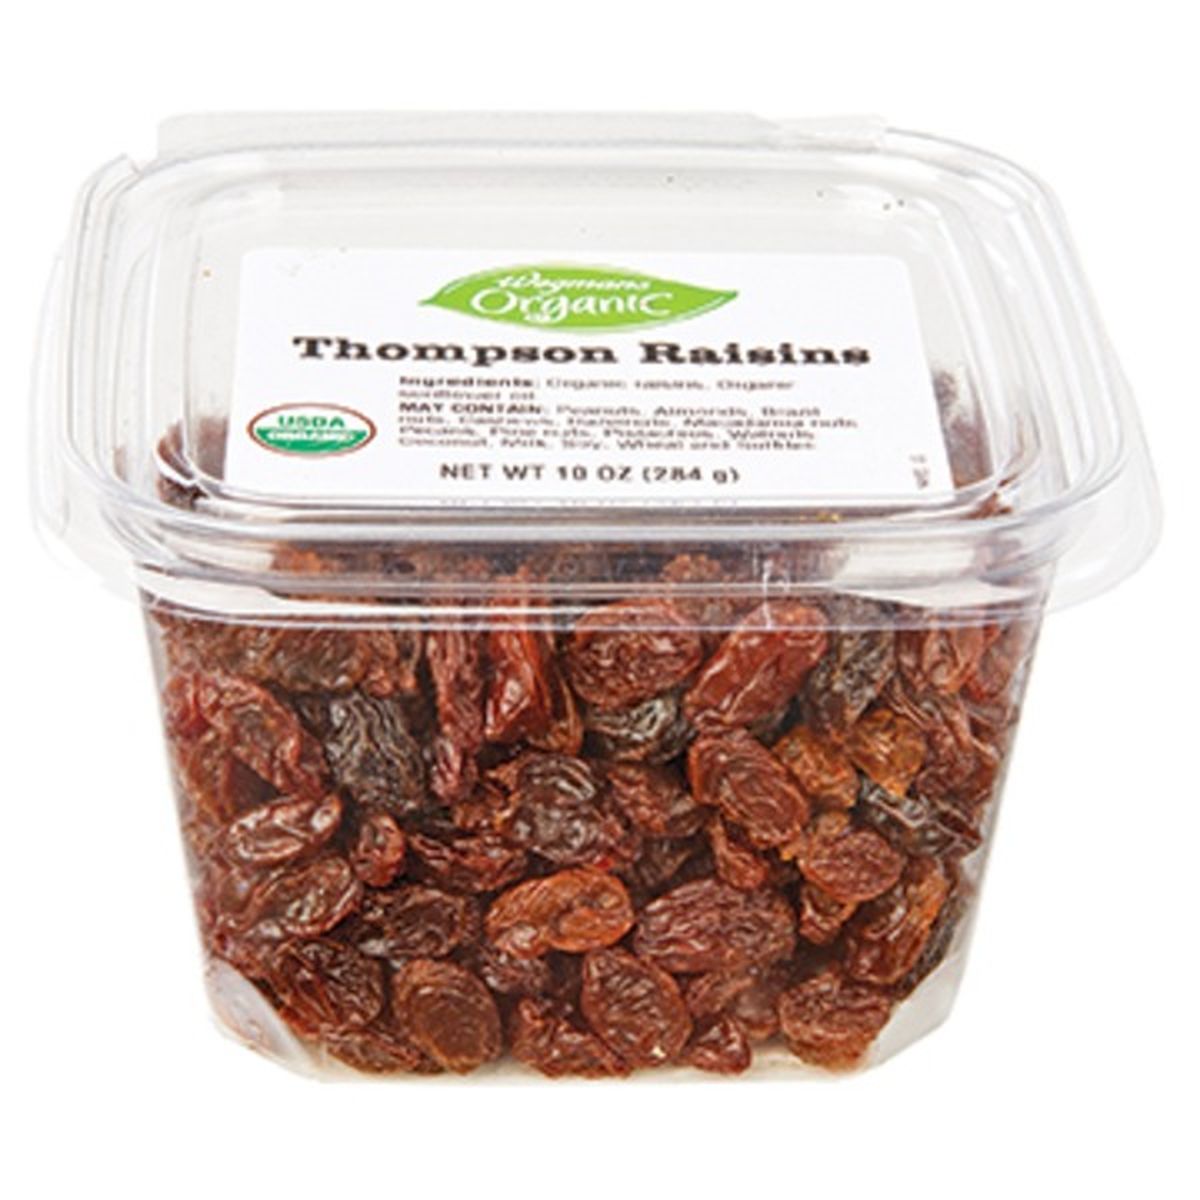 Calories in Wegmans Organic Thompson Raisins